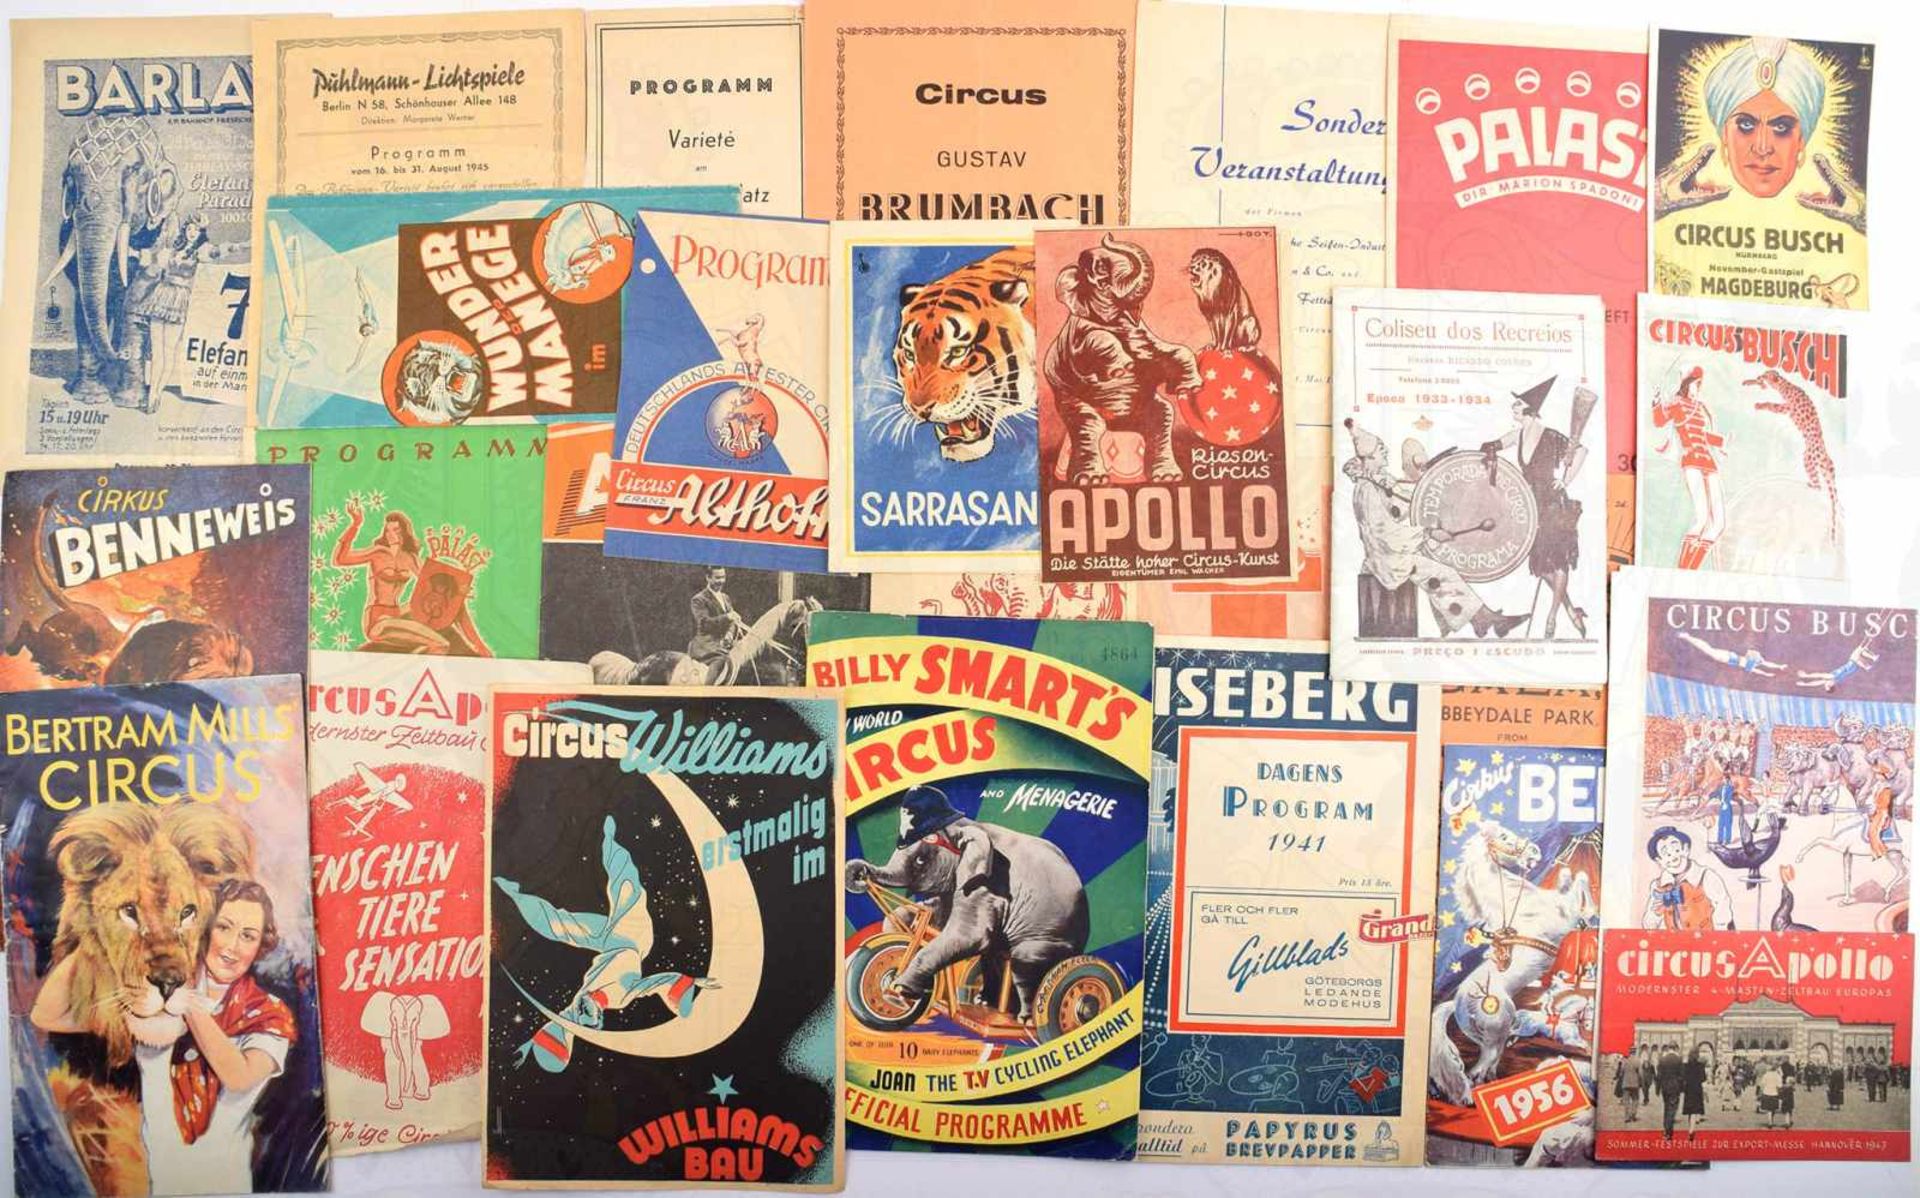 33 PROGRAMME ZIRKUS/VARIETEE, Kloonswesen, 1933-1955, zahlr. Fotos u. Abb., farb. Titelbilder, 24